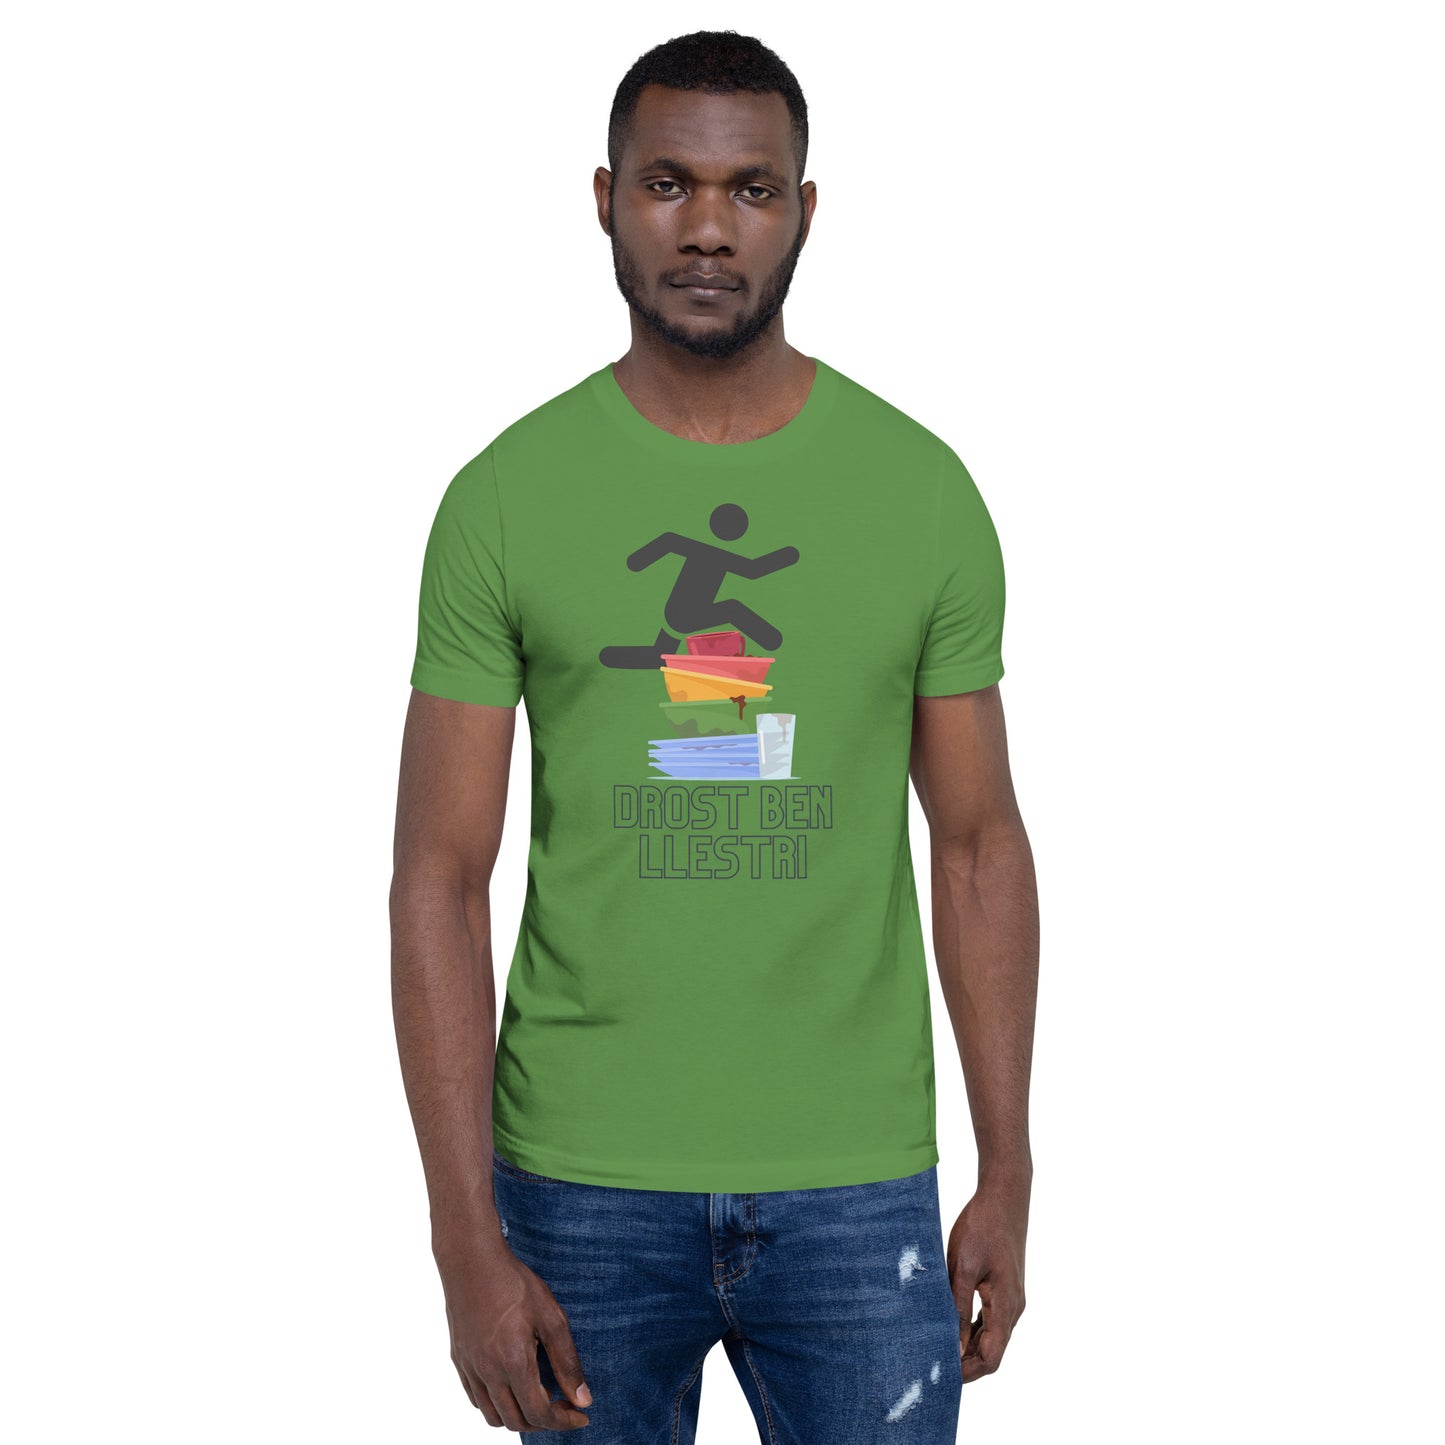 Drost ben llestri - Unisex t-shirt